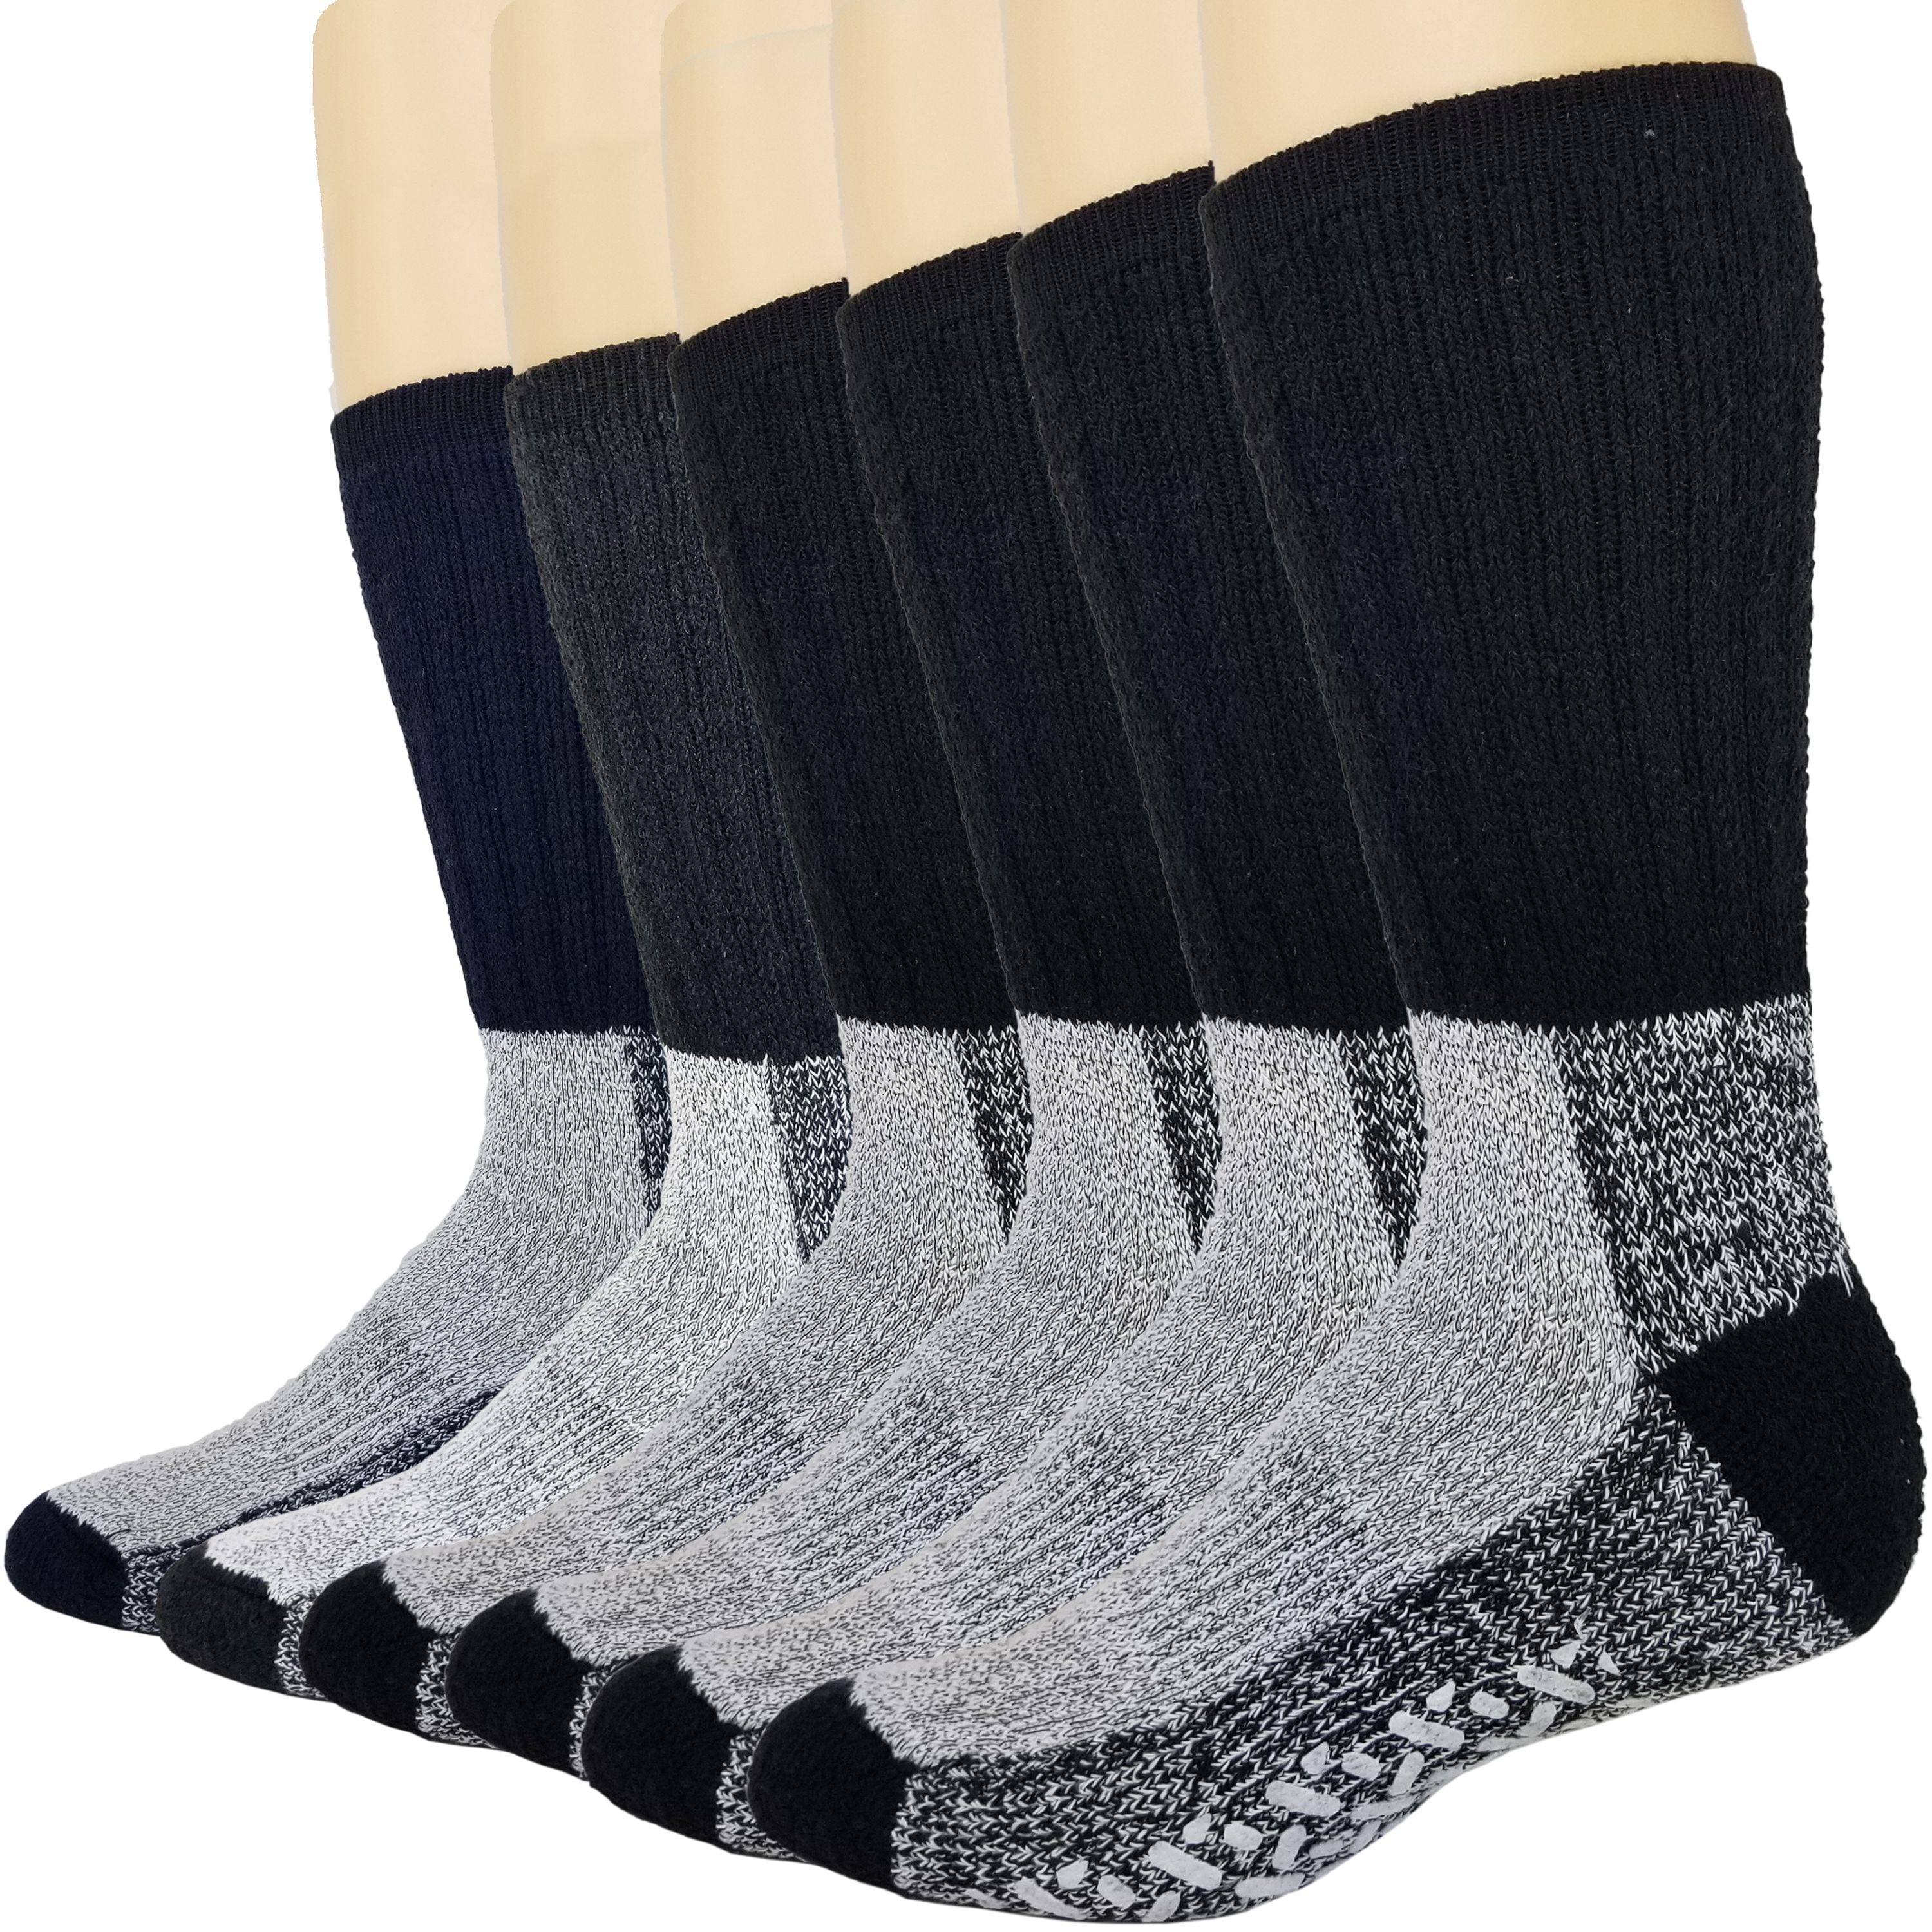 2 Pairs Merino Wool Ski Socks Long Walking Hiking Snowboard Warm Socks for Men Boys Thicken Terry Cushion Outdoor Athletic Socks Thermal Winter Mens Socks Size 6-9 UK 